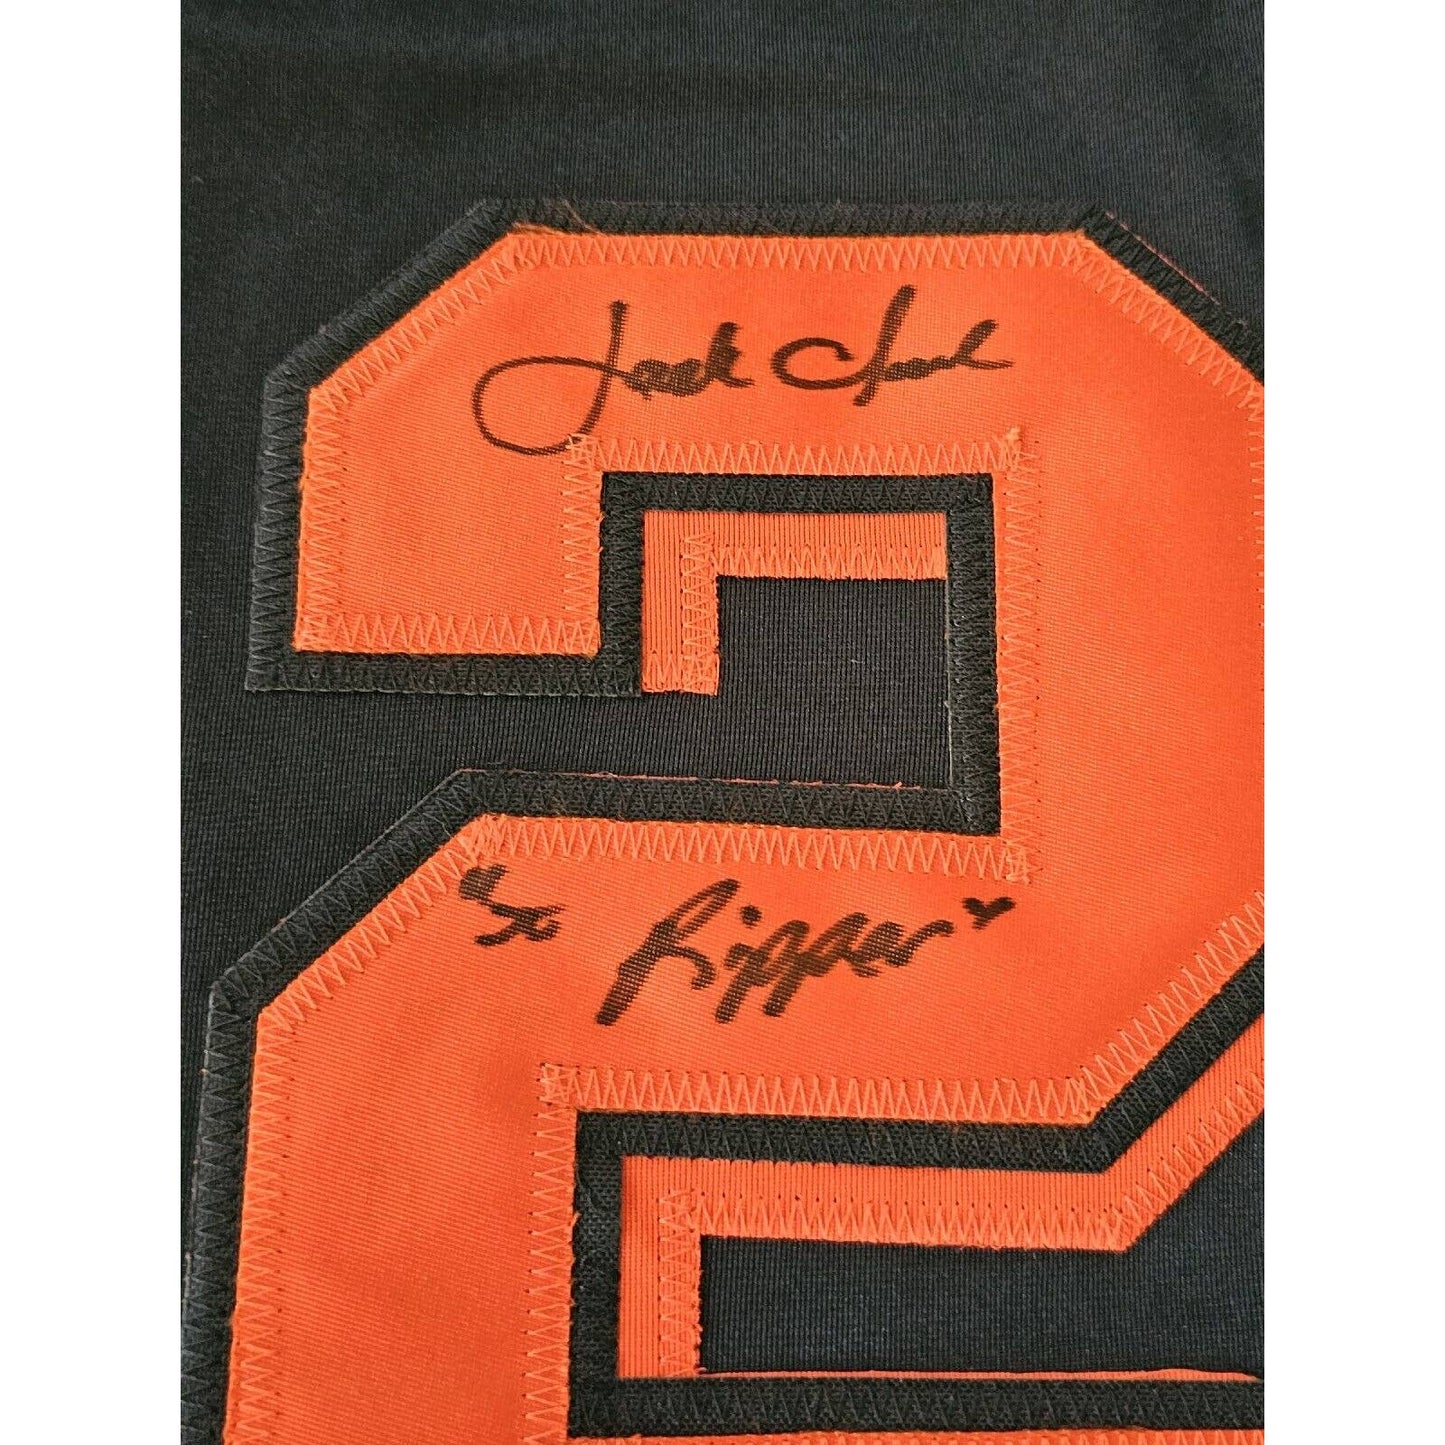 Jack Clark Autographed/Signed Jersey JSA COA San Francisco Giants Inscribed